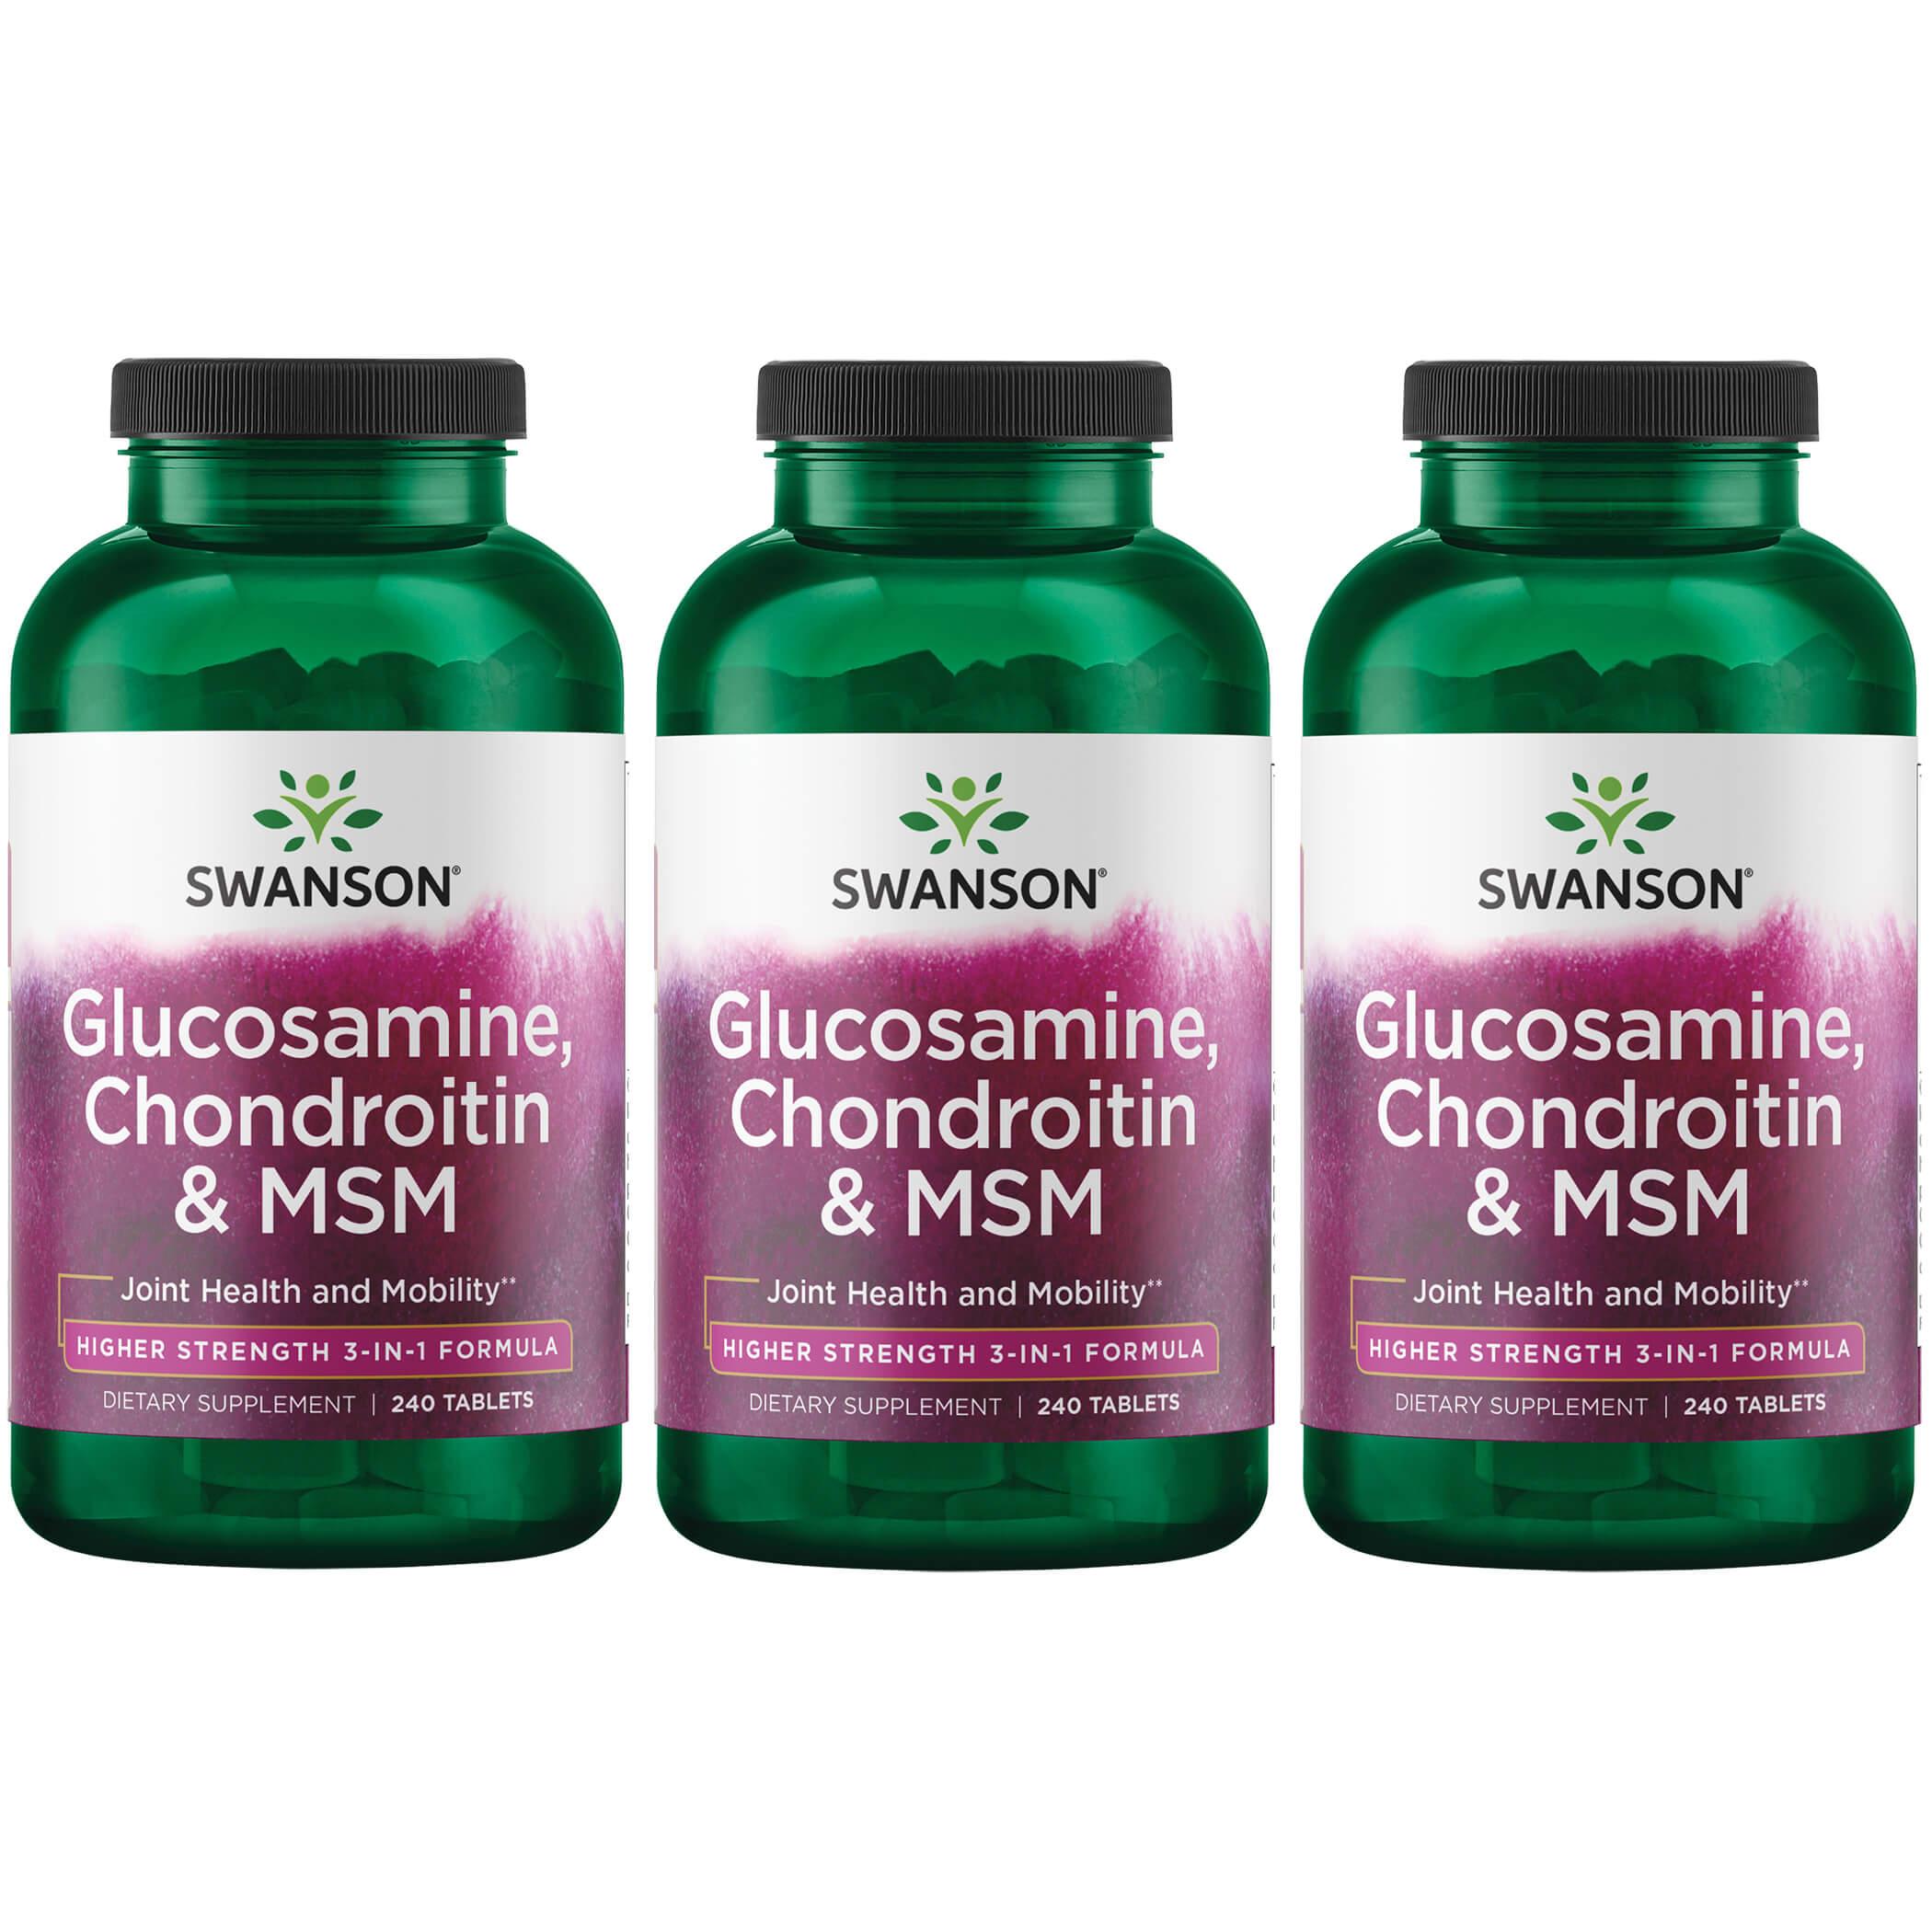 Swanson Premium Glucosamine, Chondroitin & Msm - Higher Strength 3 Pack Supplement Vitamin 240 Tabs